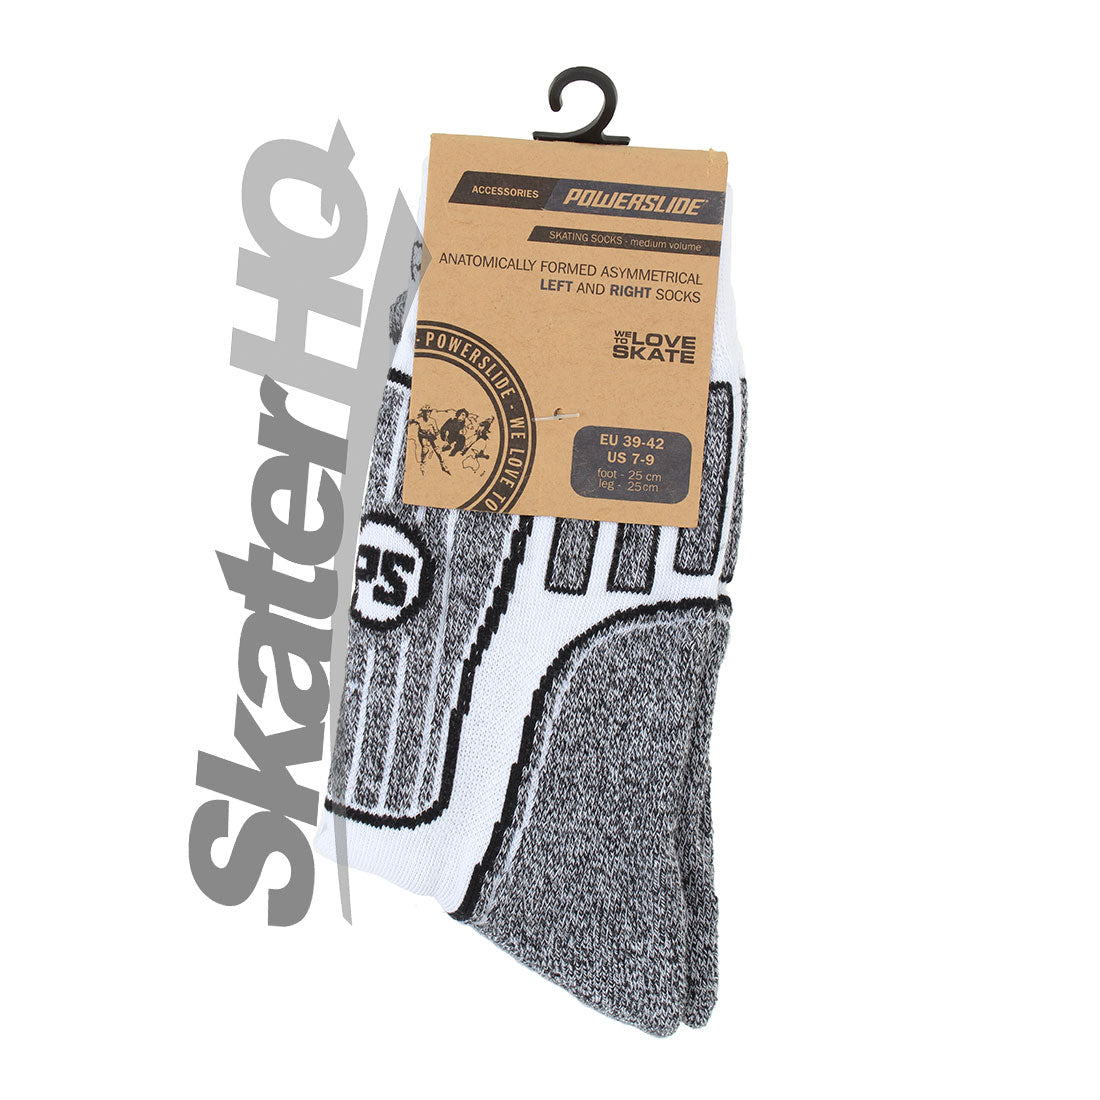 Powerslide Skating Socks - 7-9US EU39-42 Apparel Socks